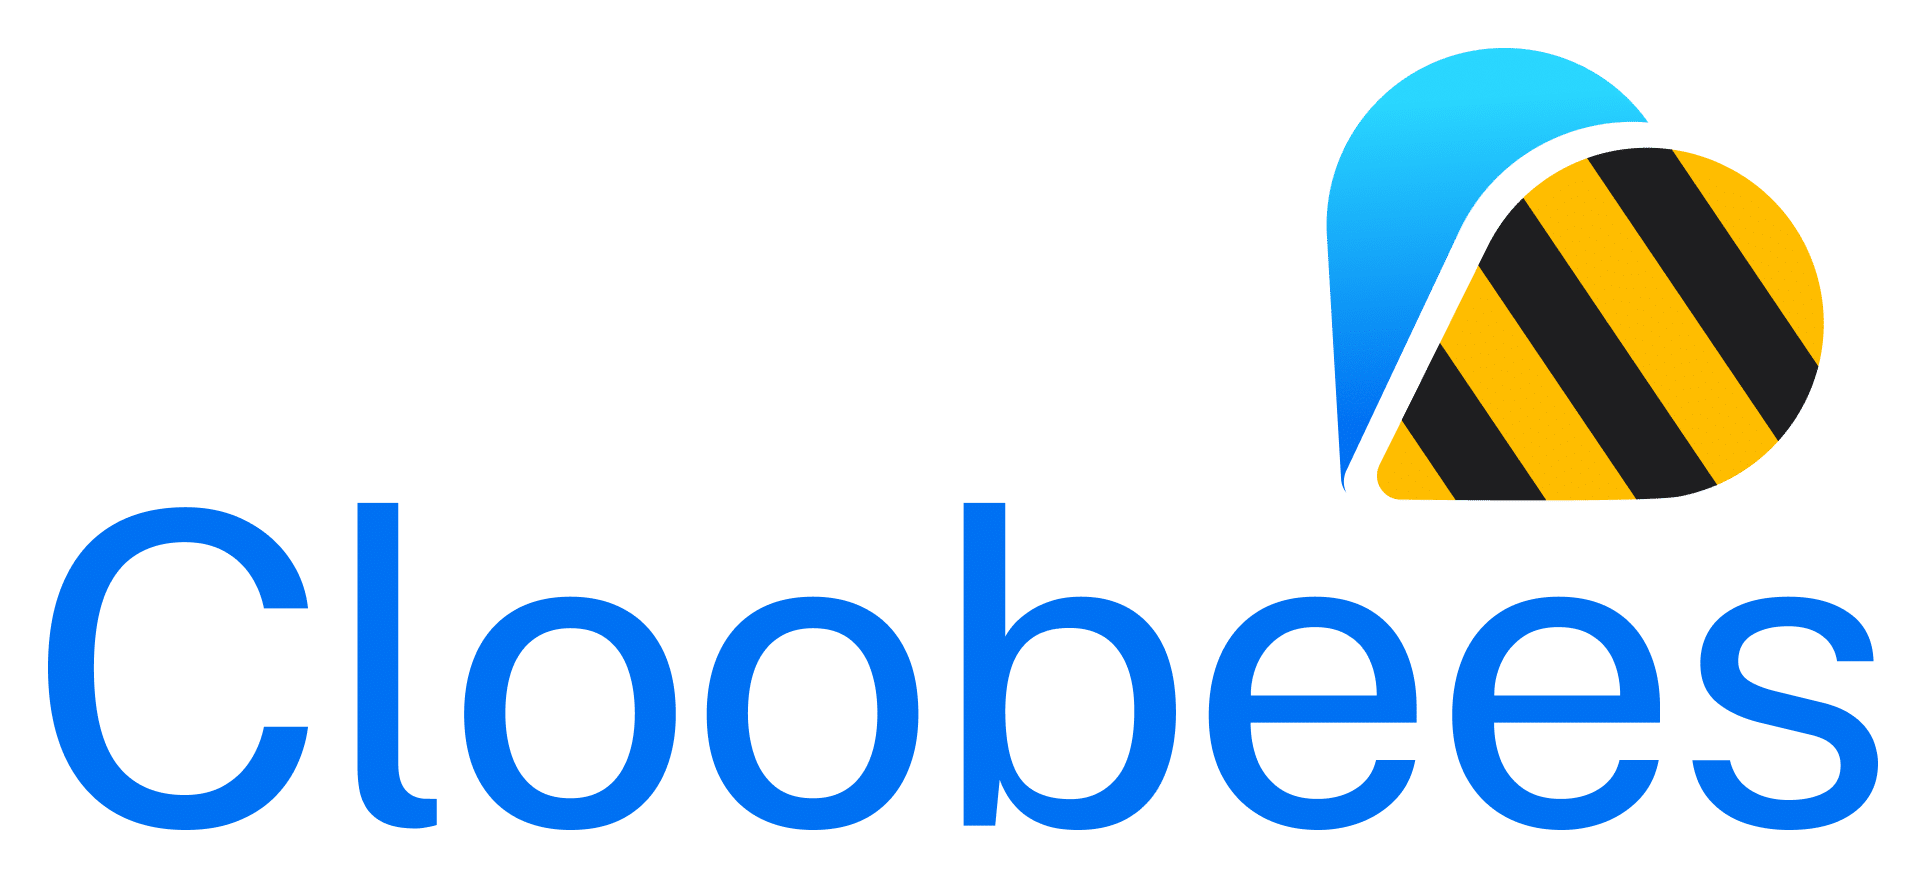 Cloobees logo